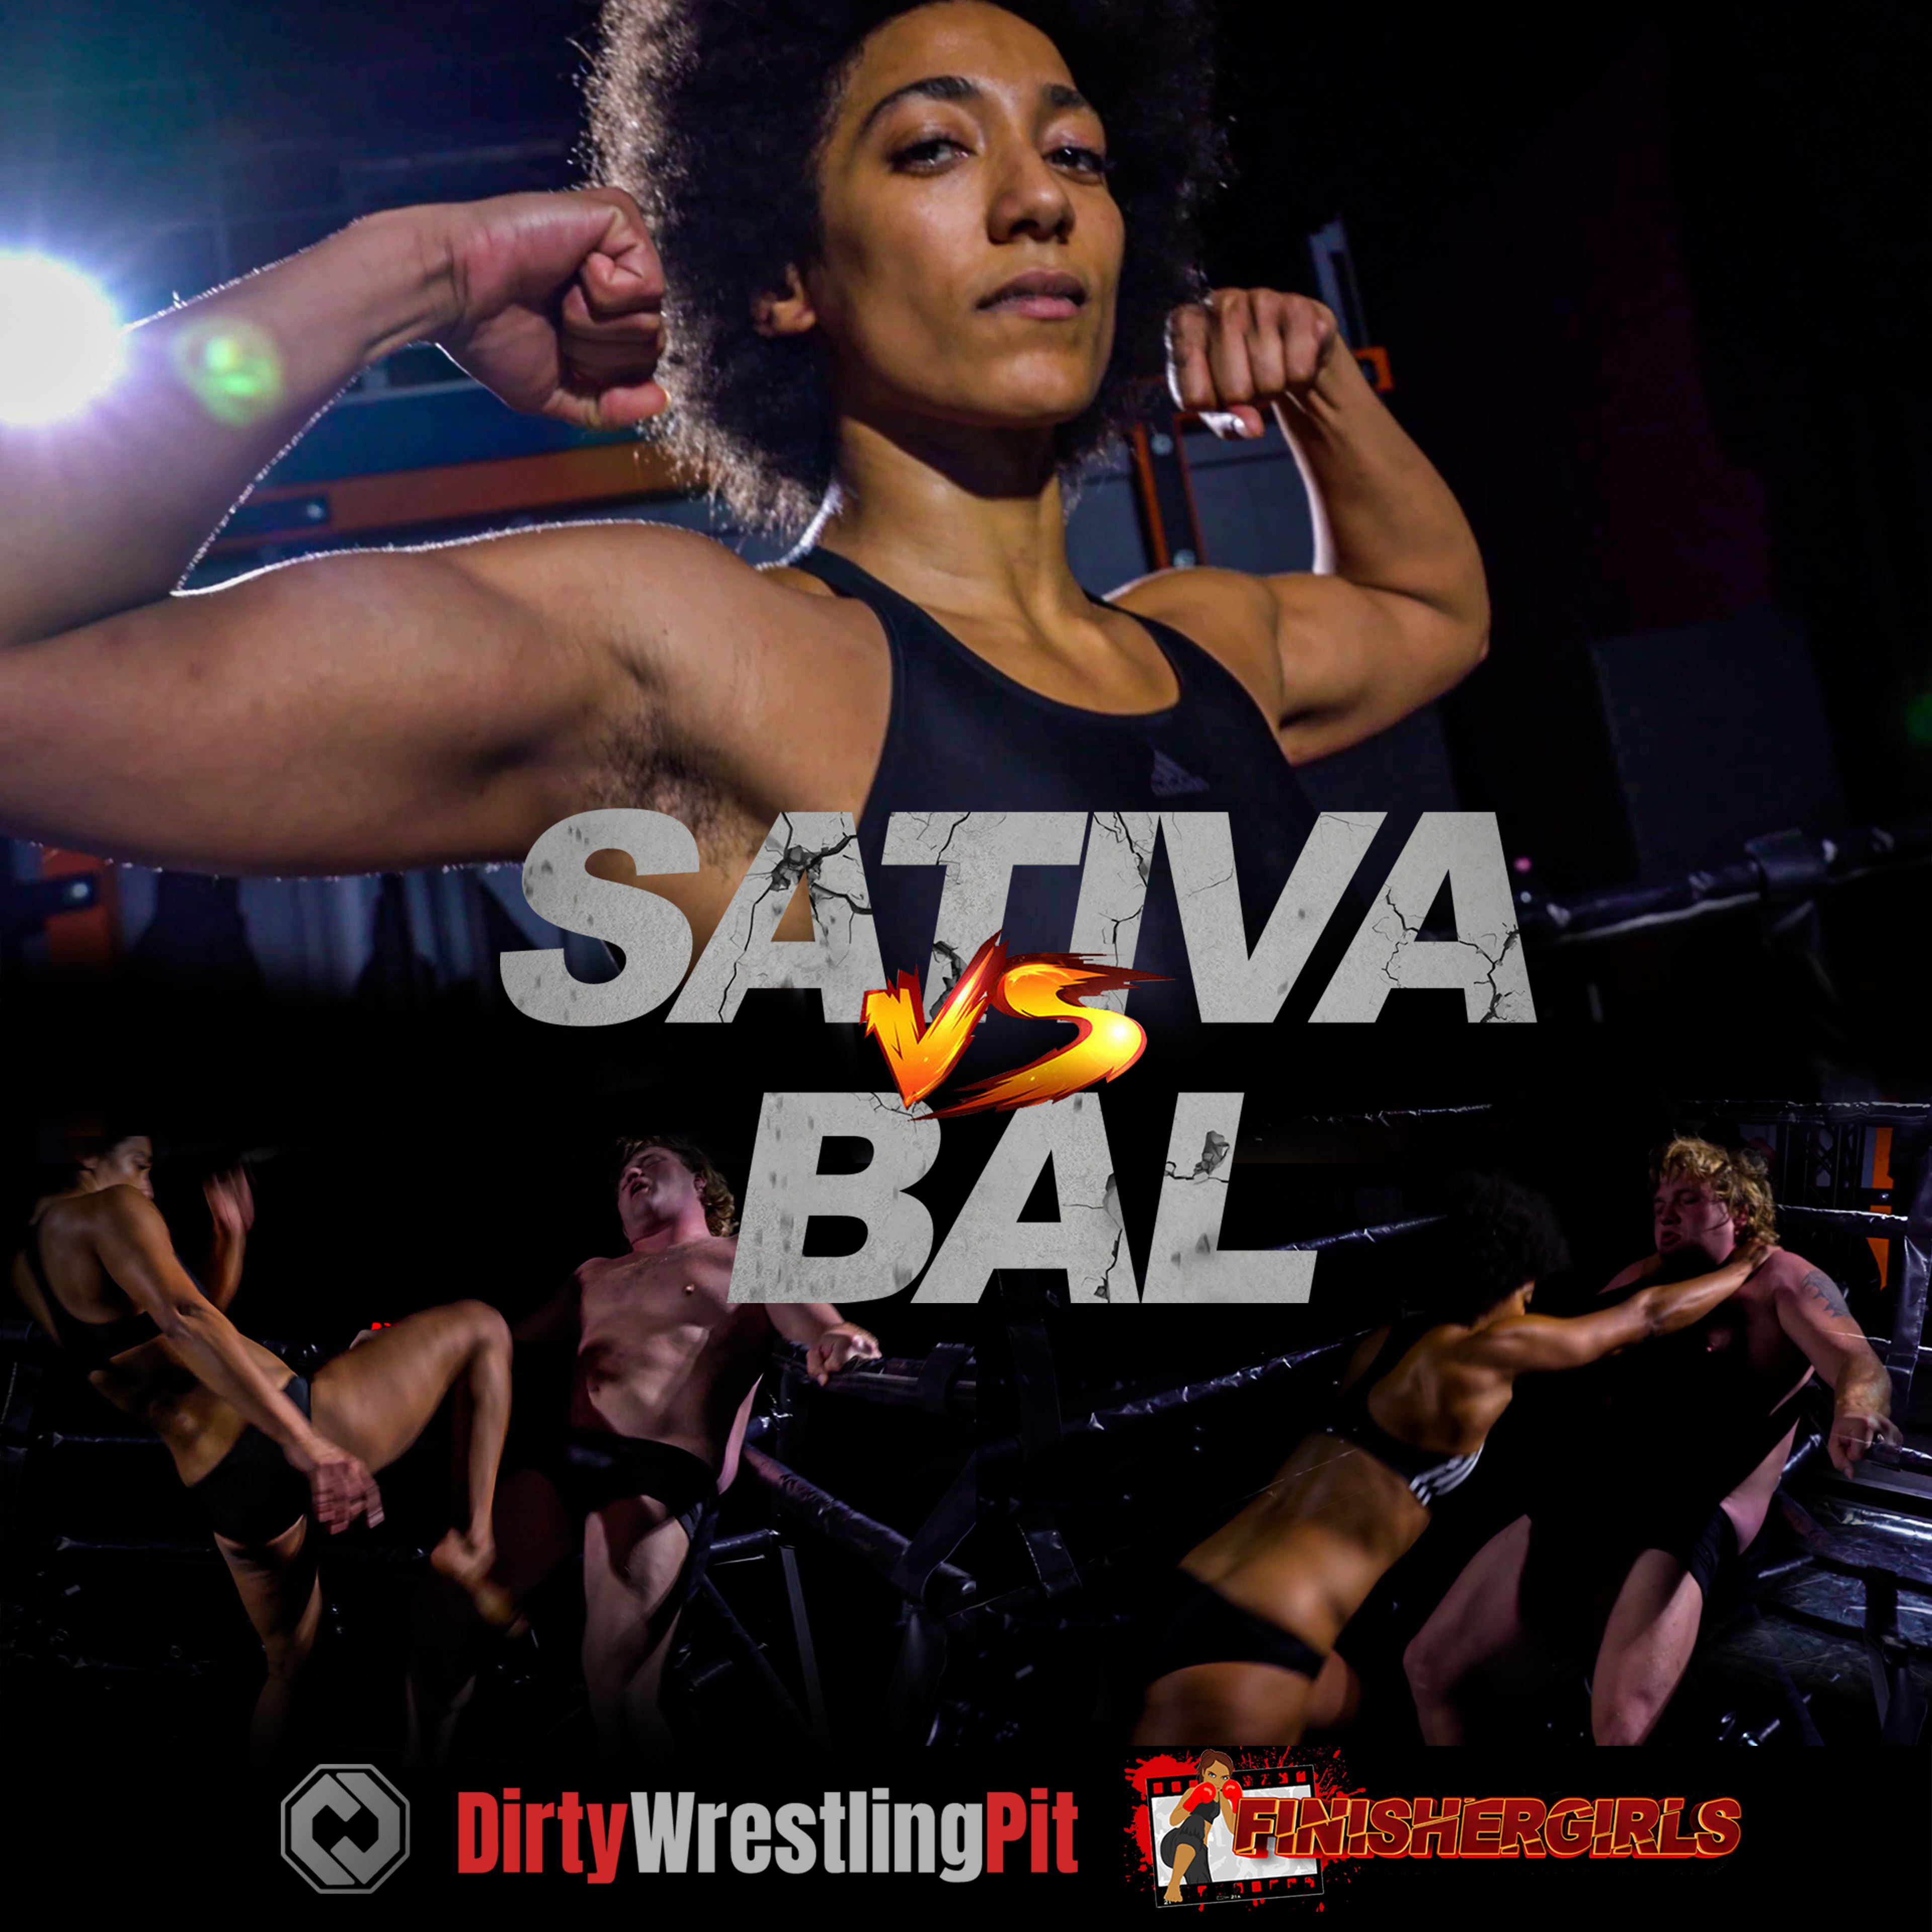 <b>TOP TITLE:</b><br/>Sativa versus Bal: Beatdown in the Ring